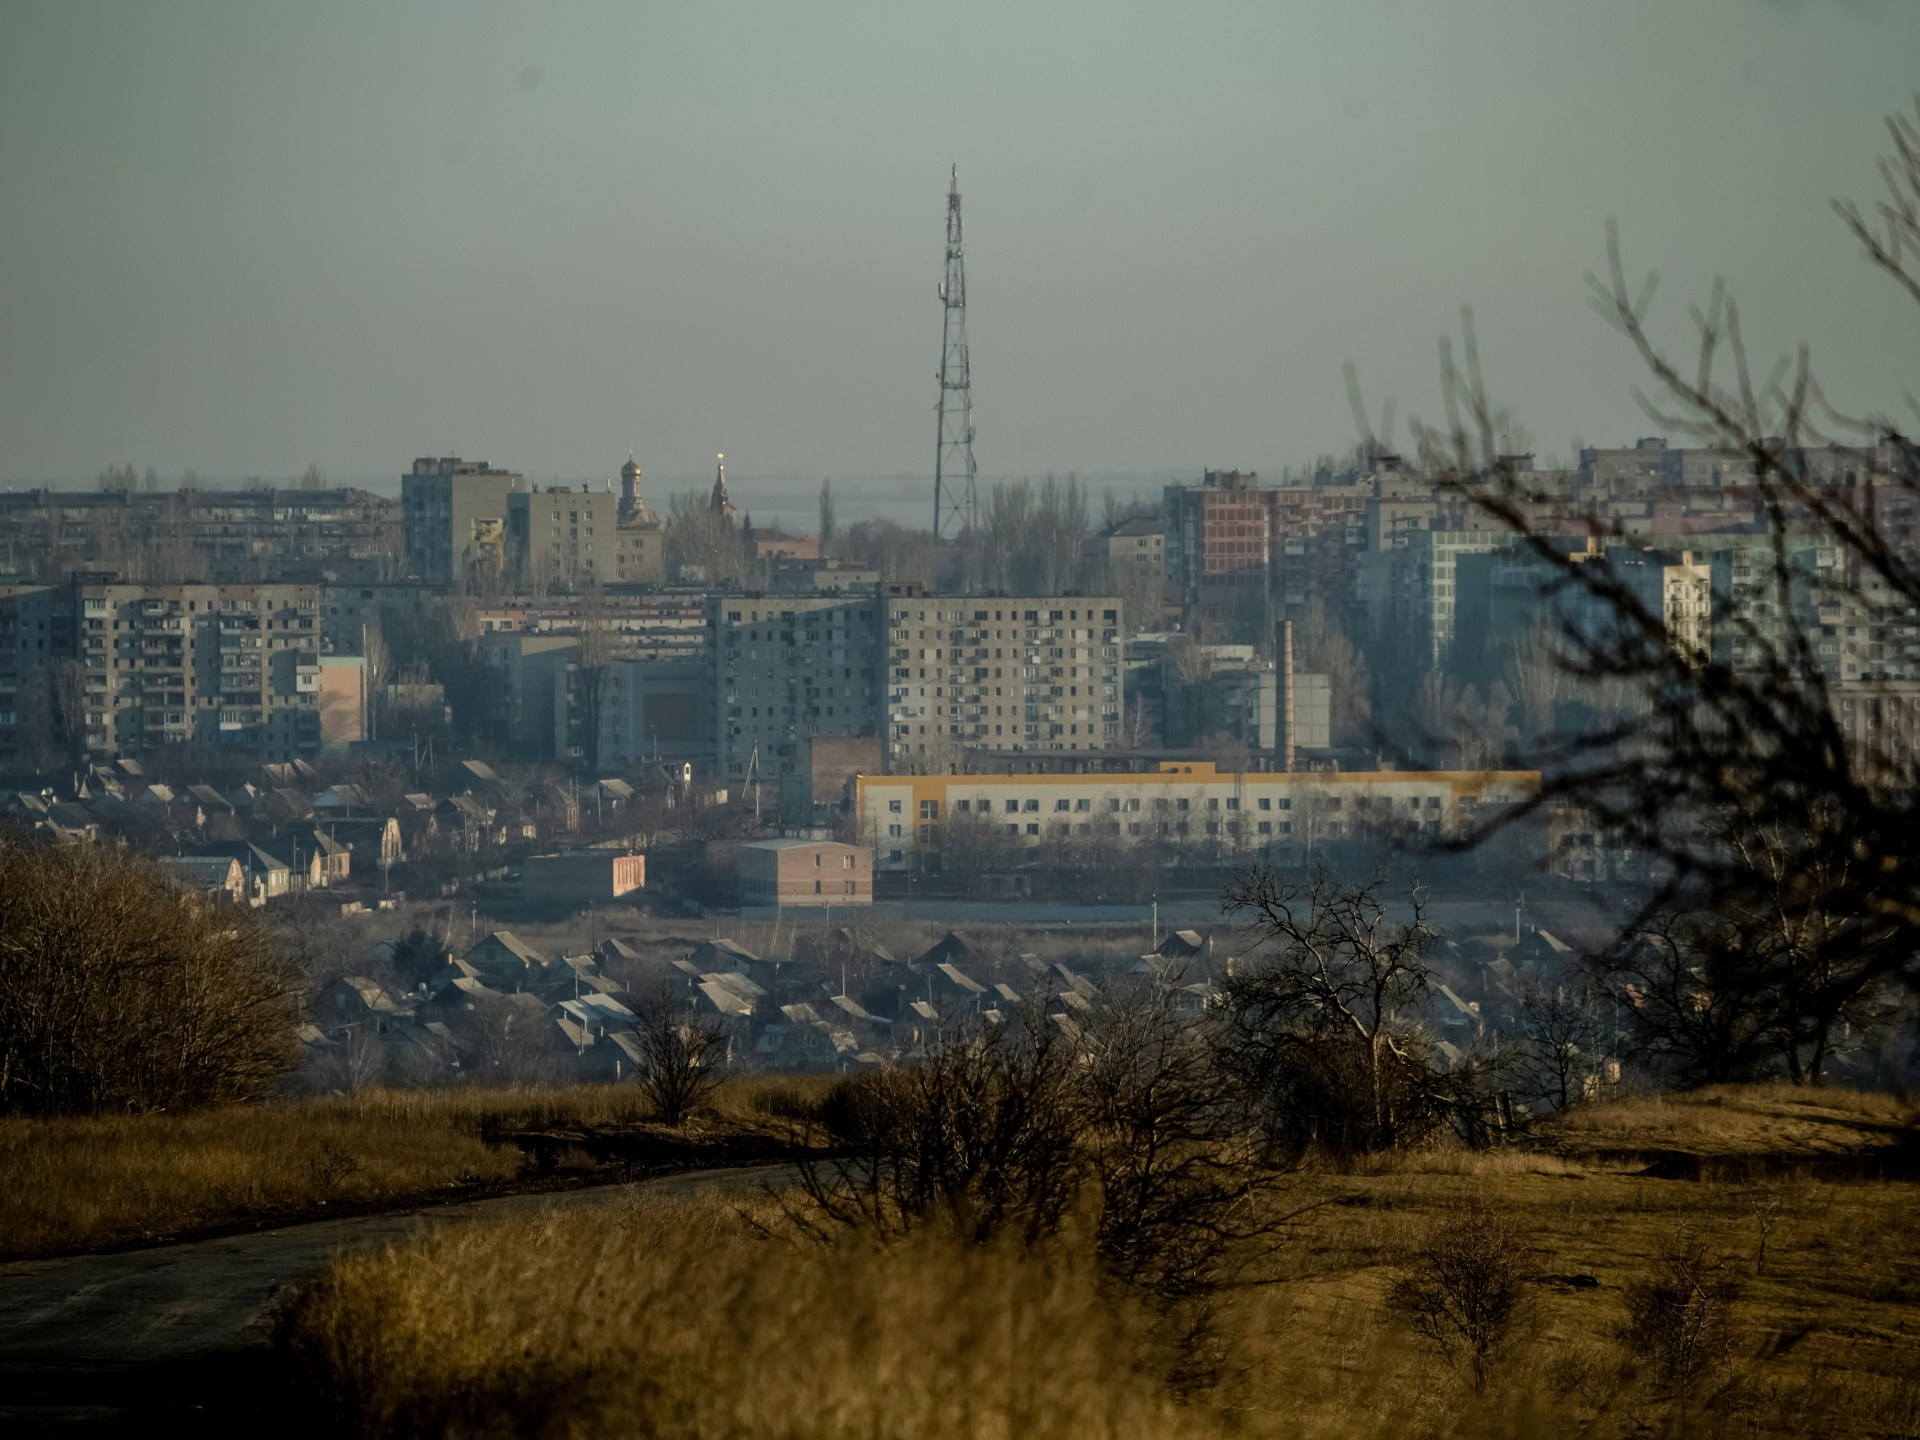 Russia claims village close to embattled Ukrainian metropolis of Bakhmut